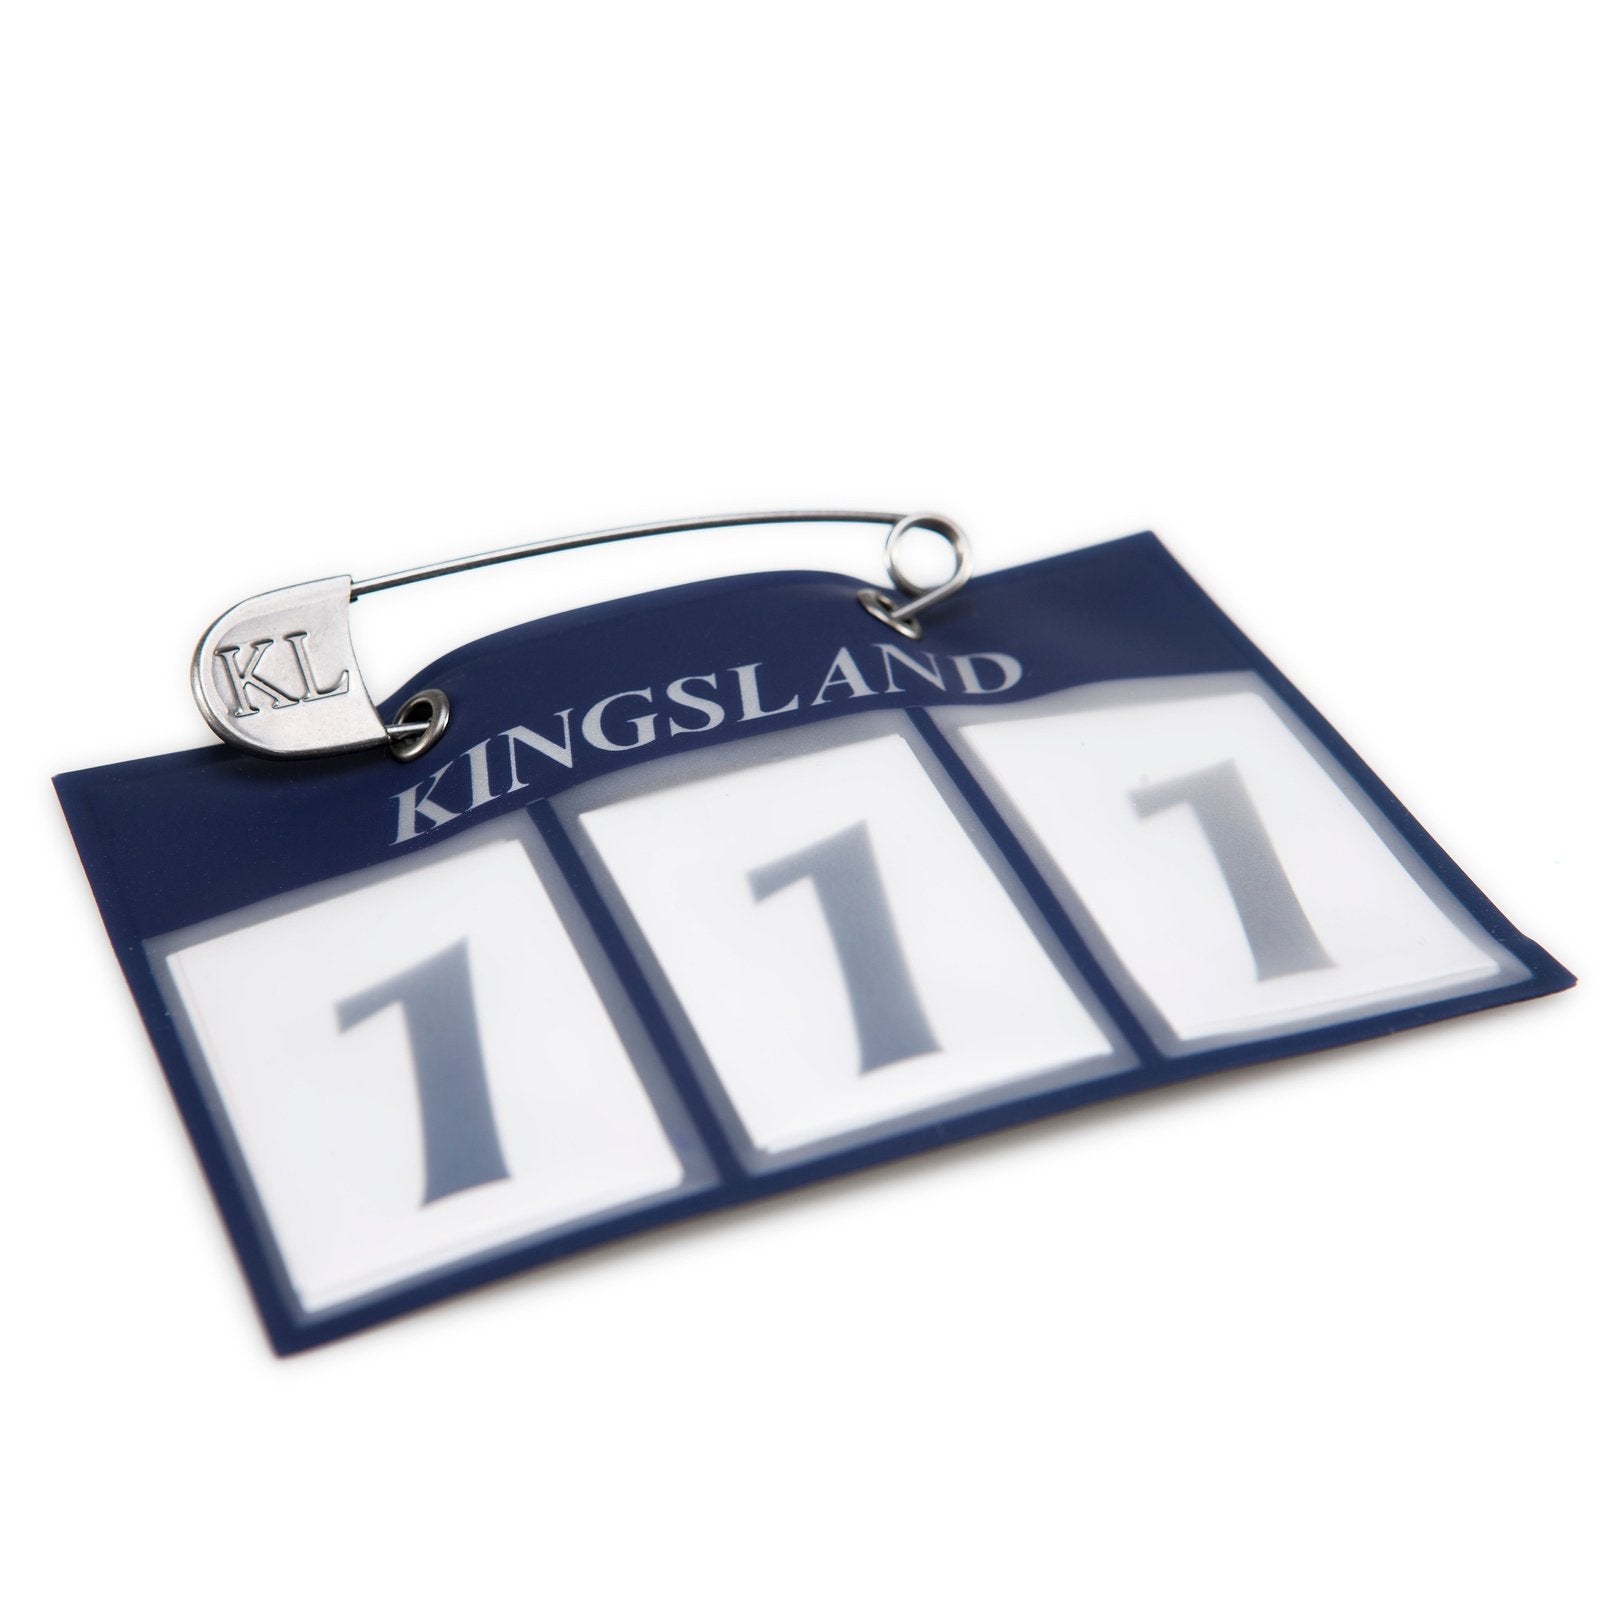 Kingsland Classic Startnummern in navy & weiß bei SP-Reitsport Kingsland bei SP-Reitsport